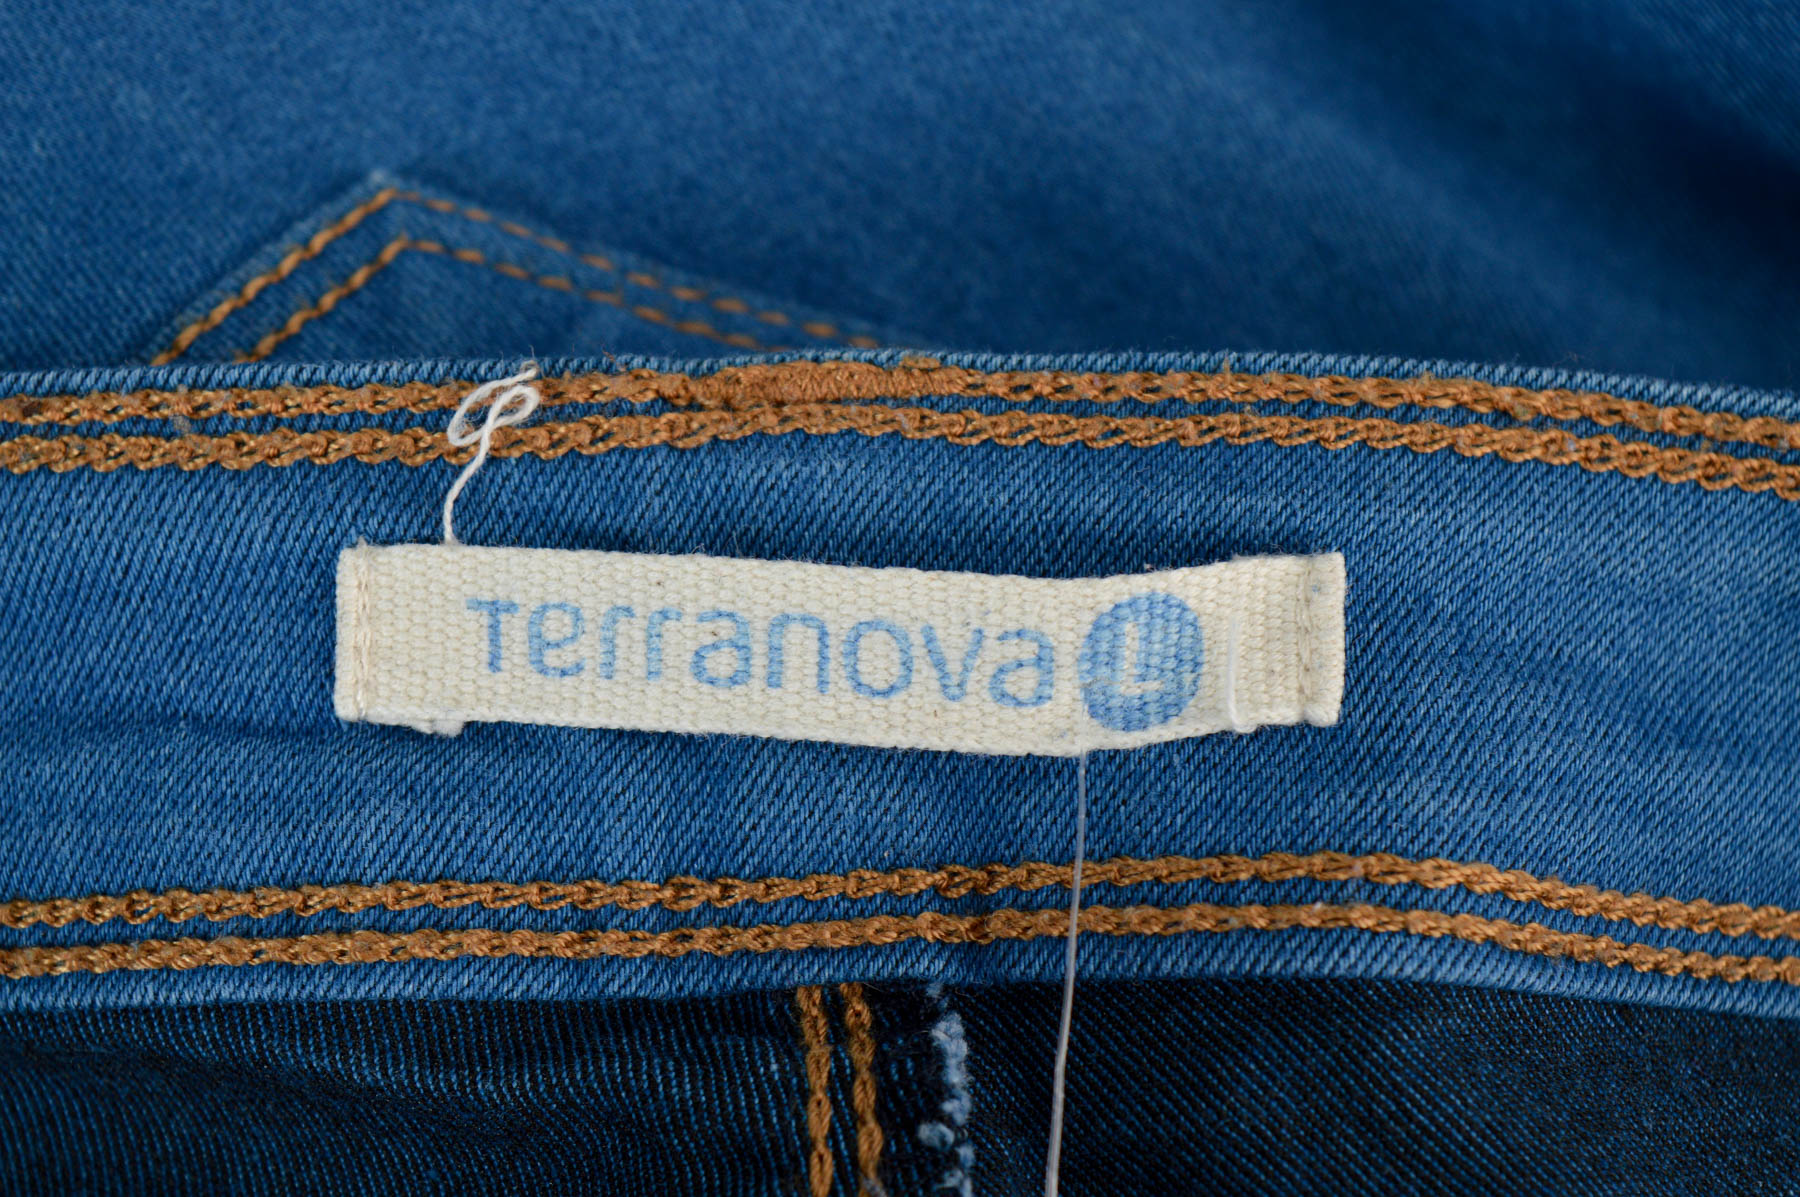 Women's trousers - Terranova - 2